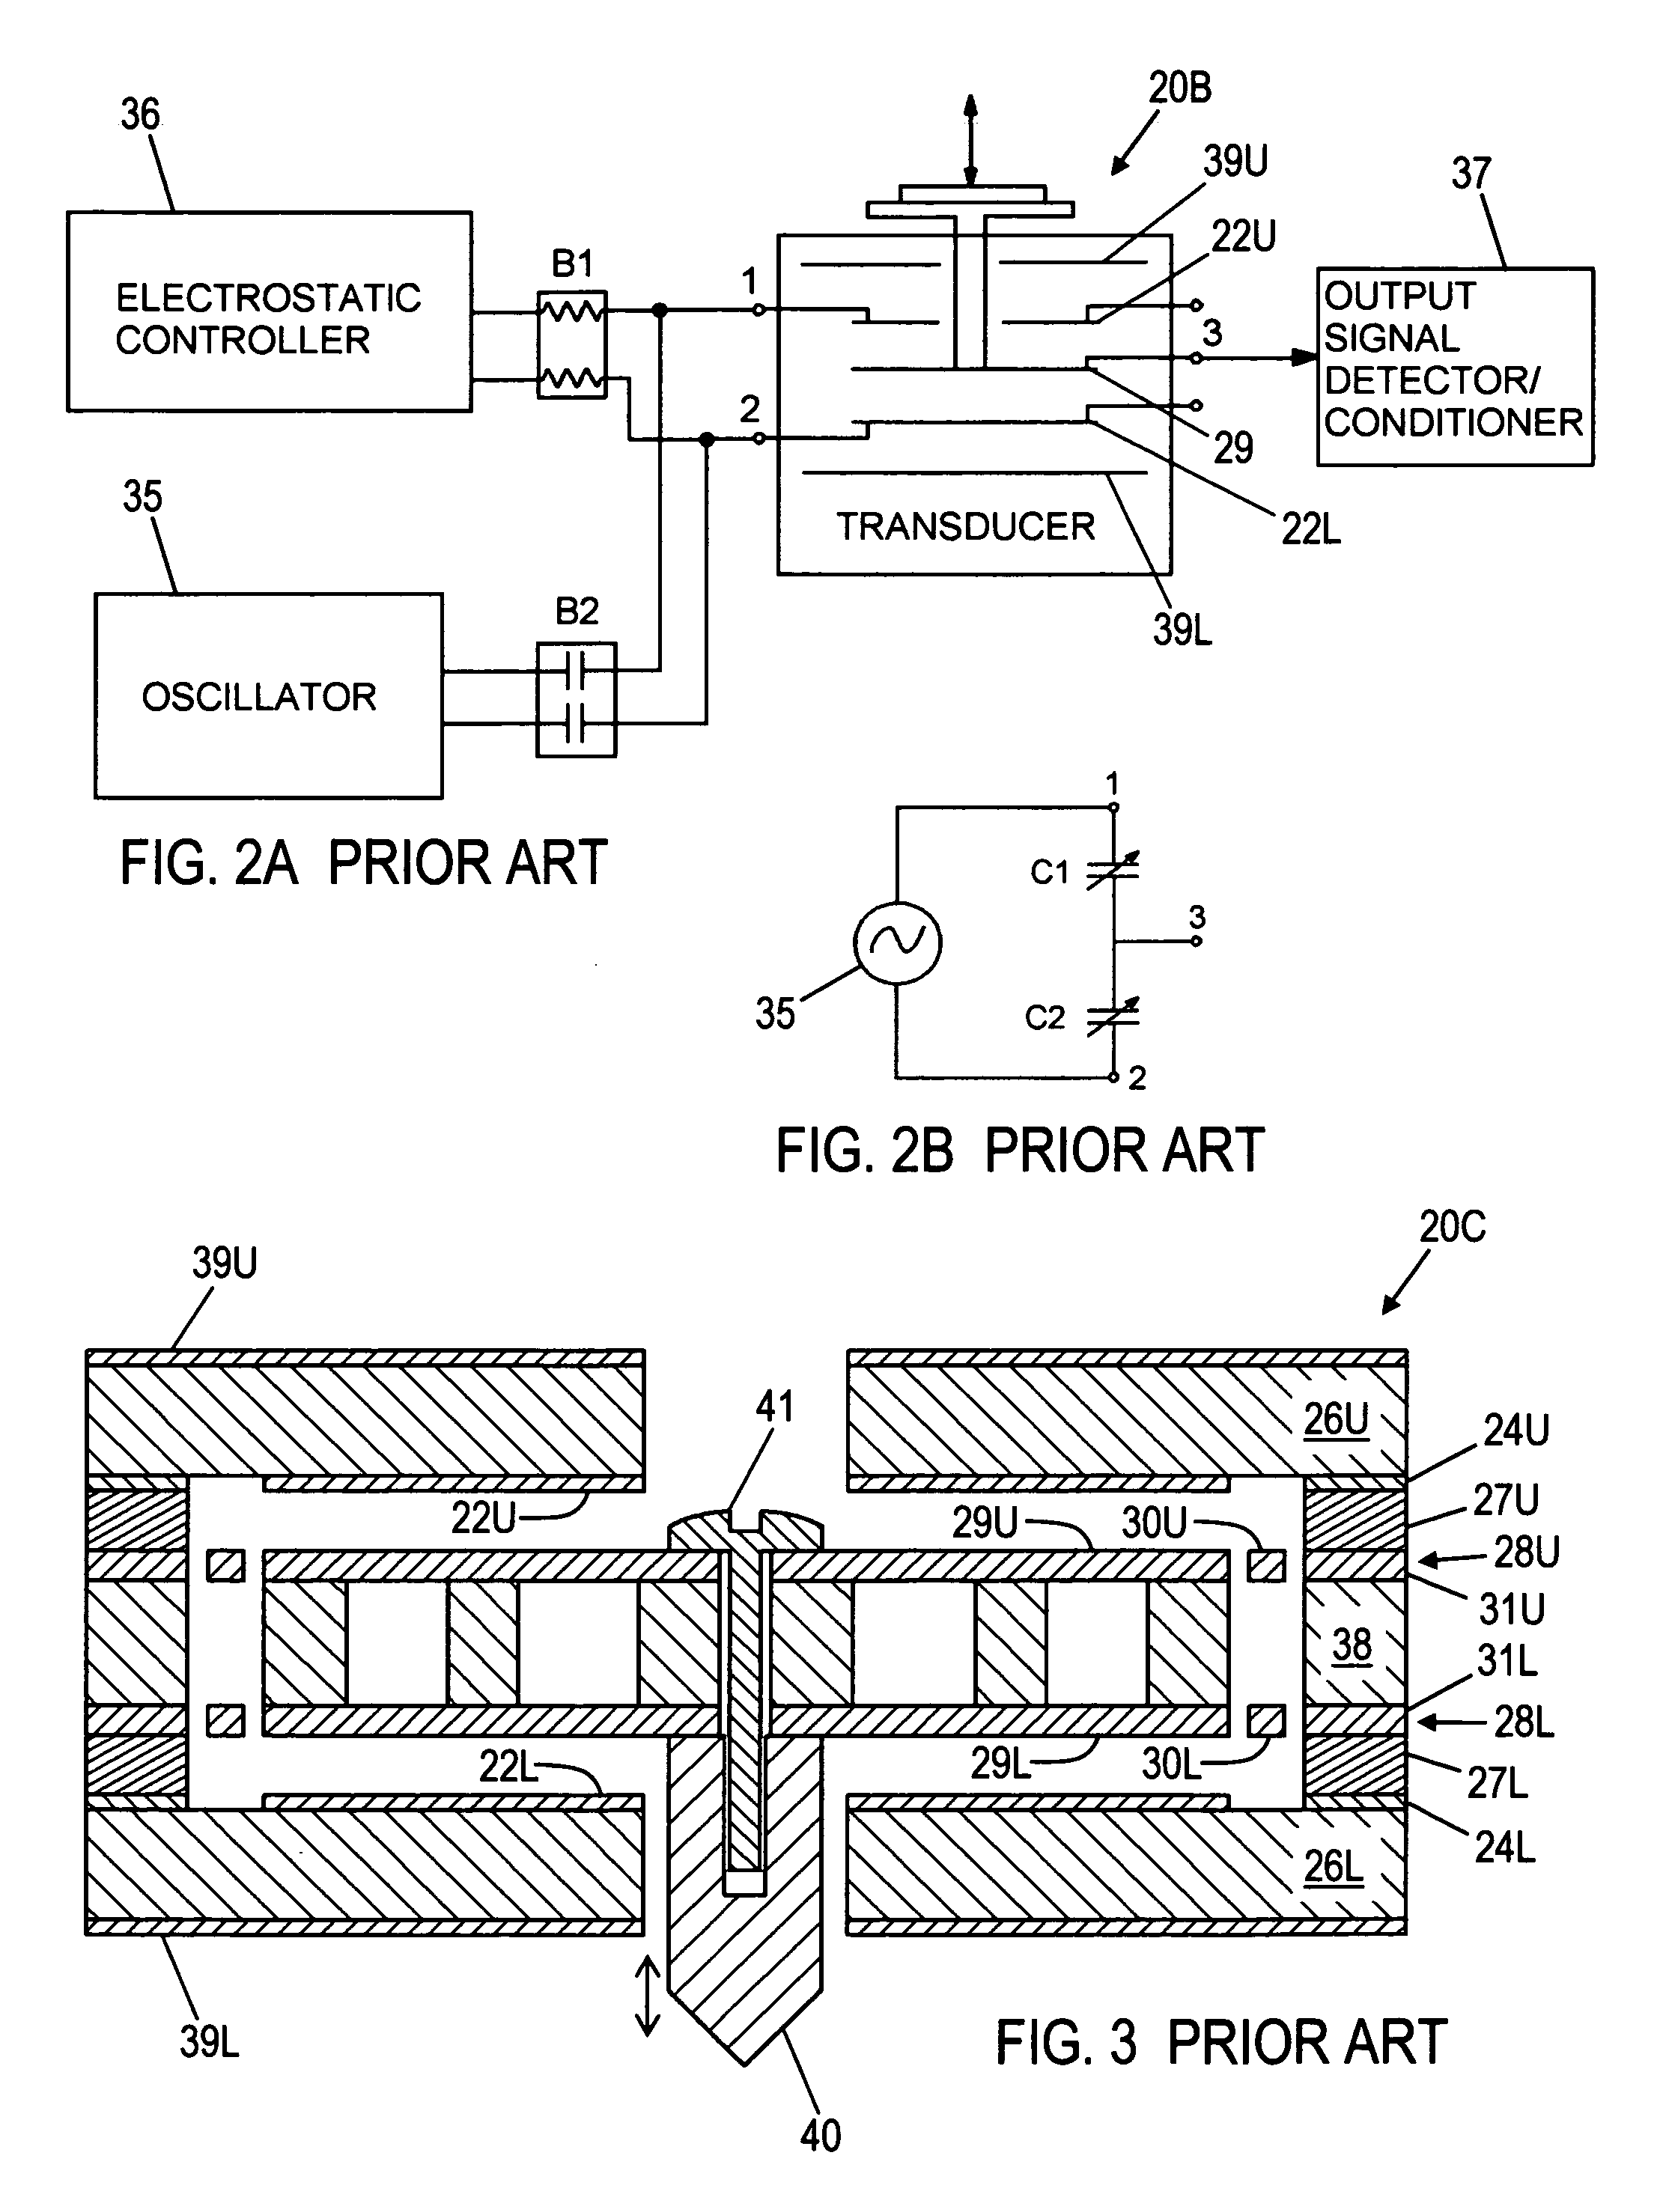 Multi-layer capacitive transducer